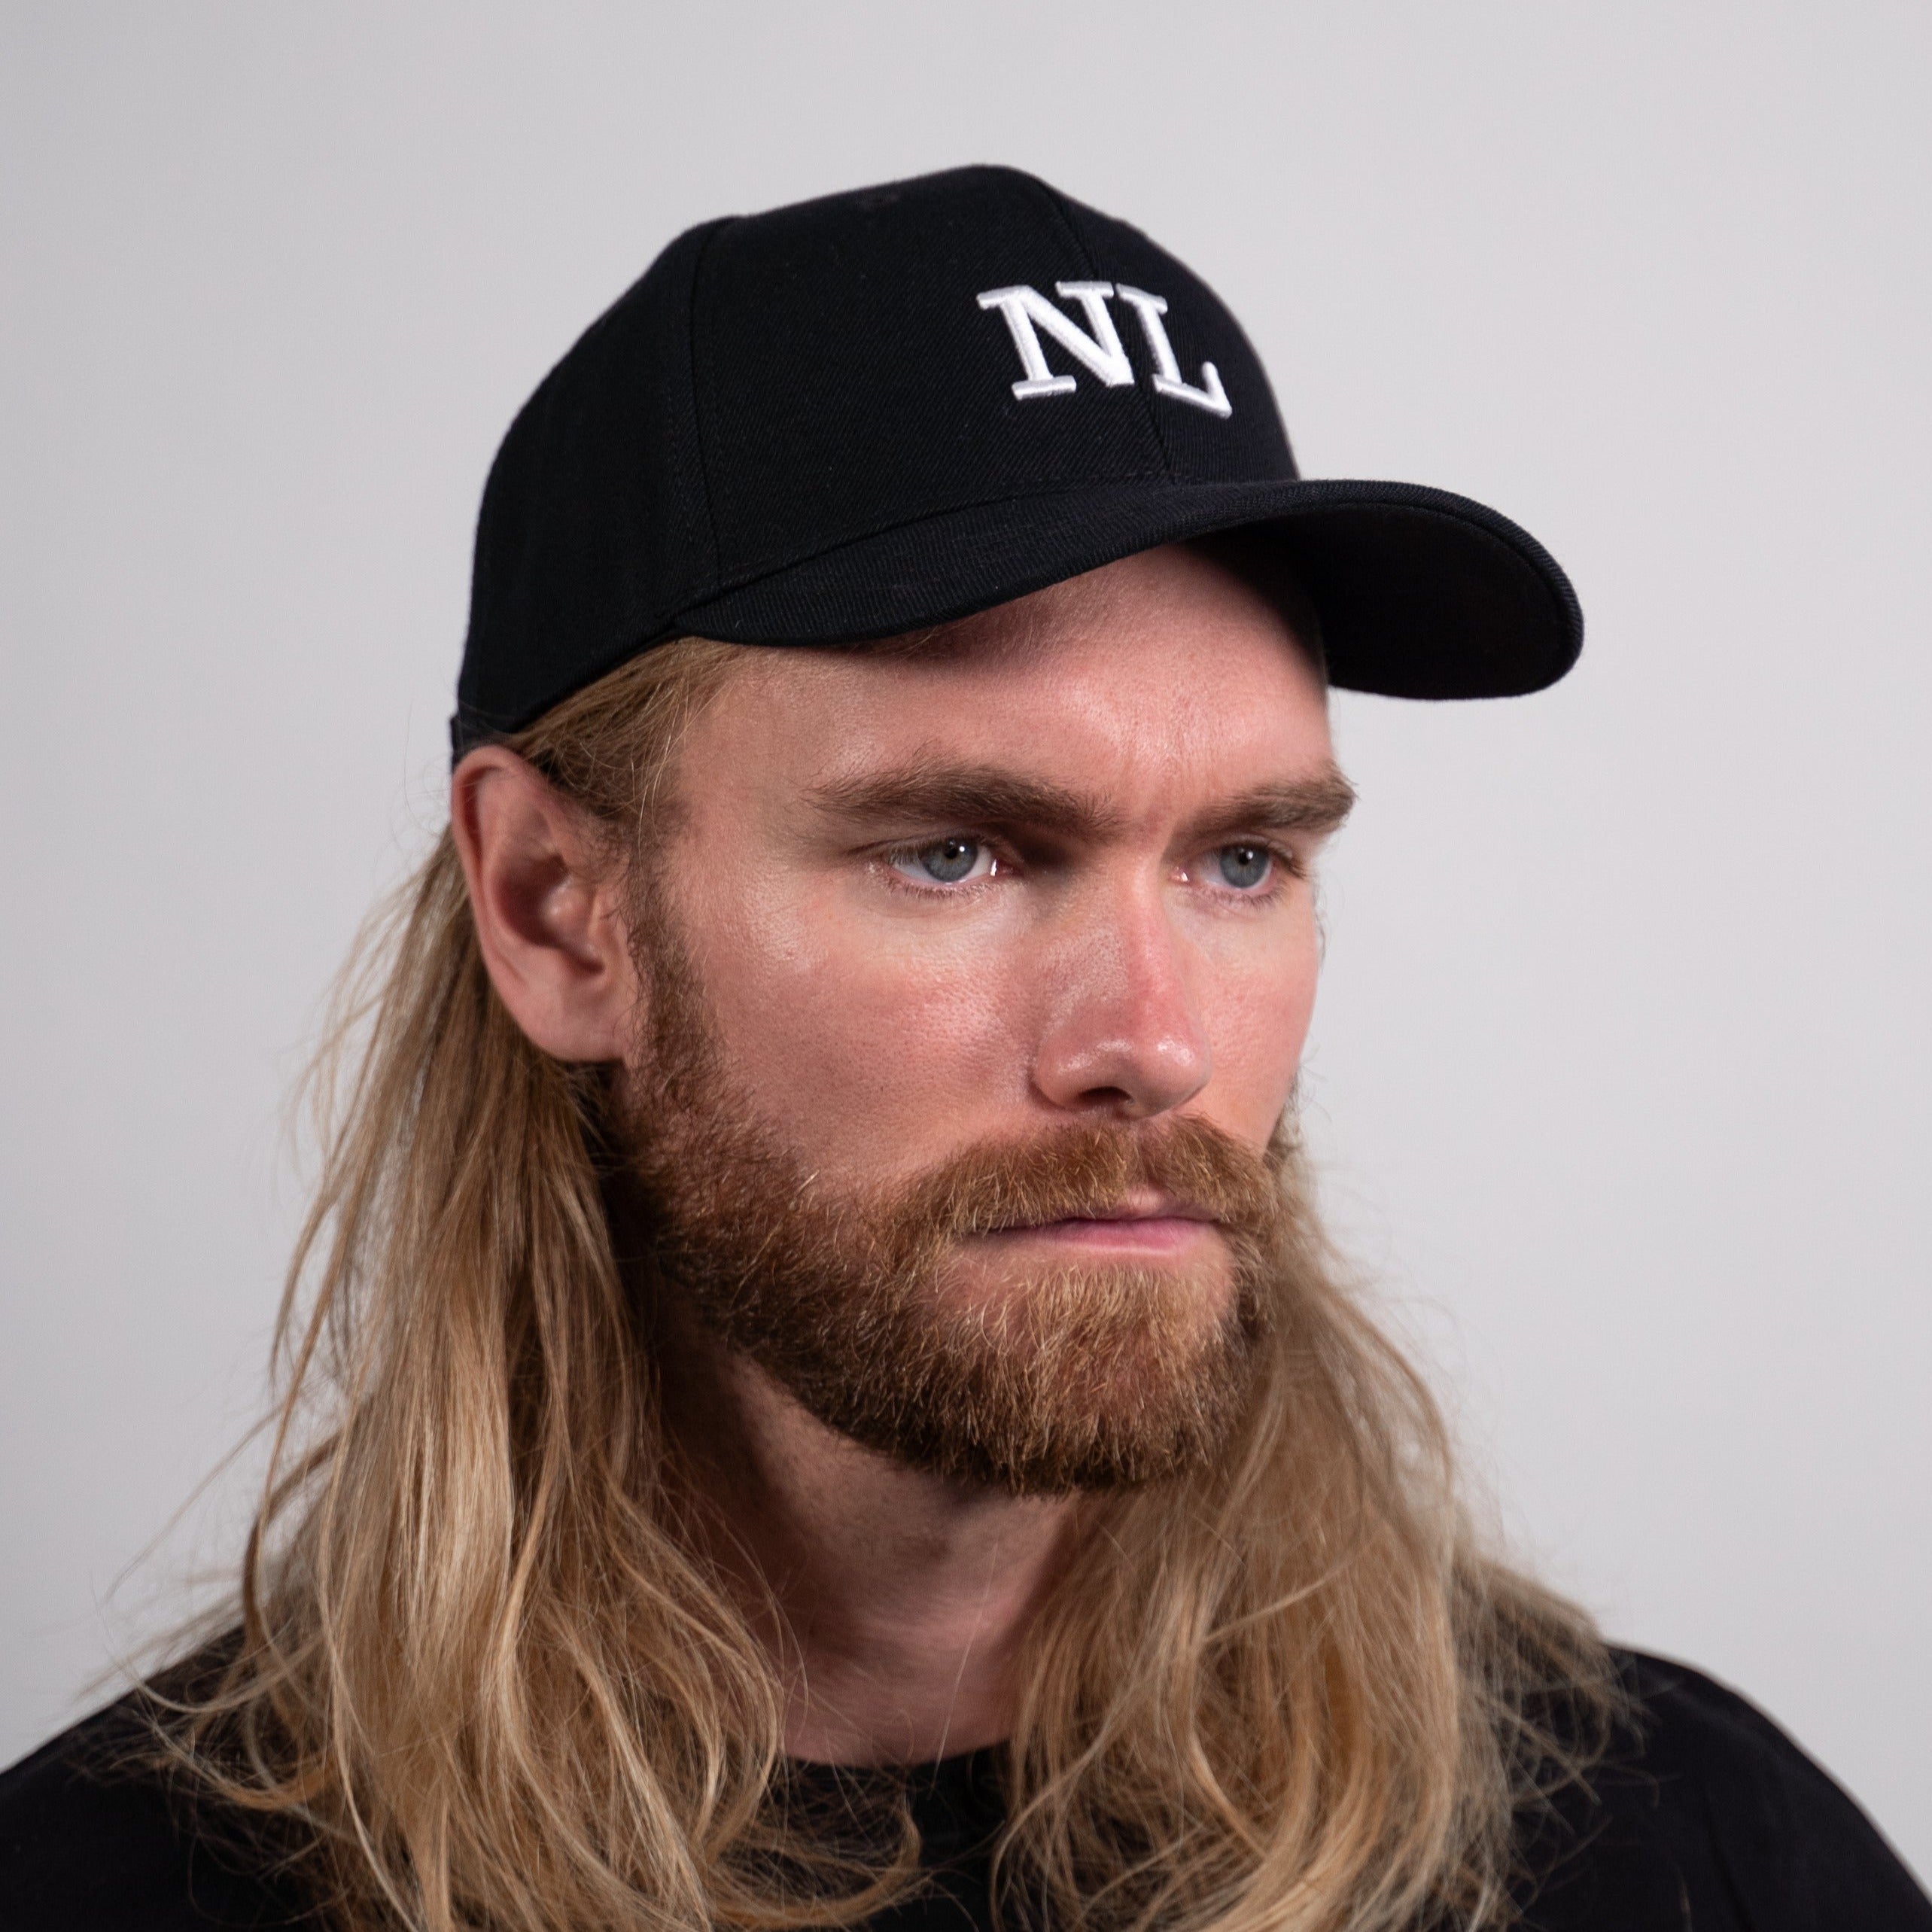 NL Dad cap - Sort/hvid